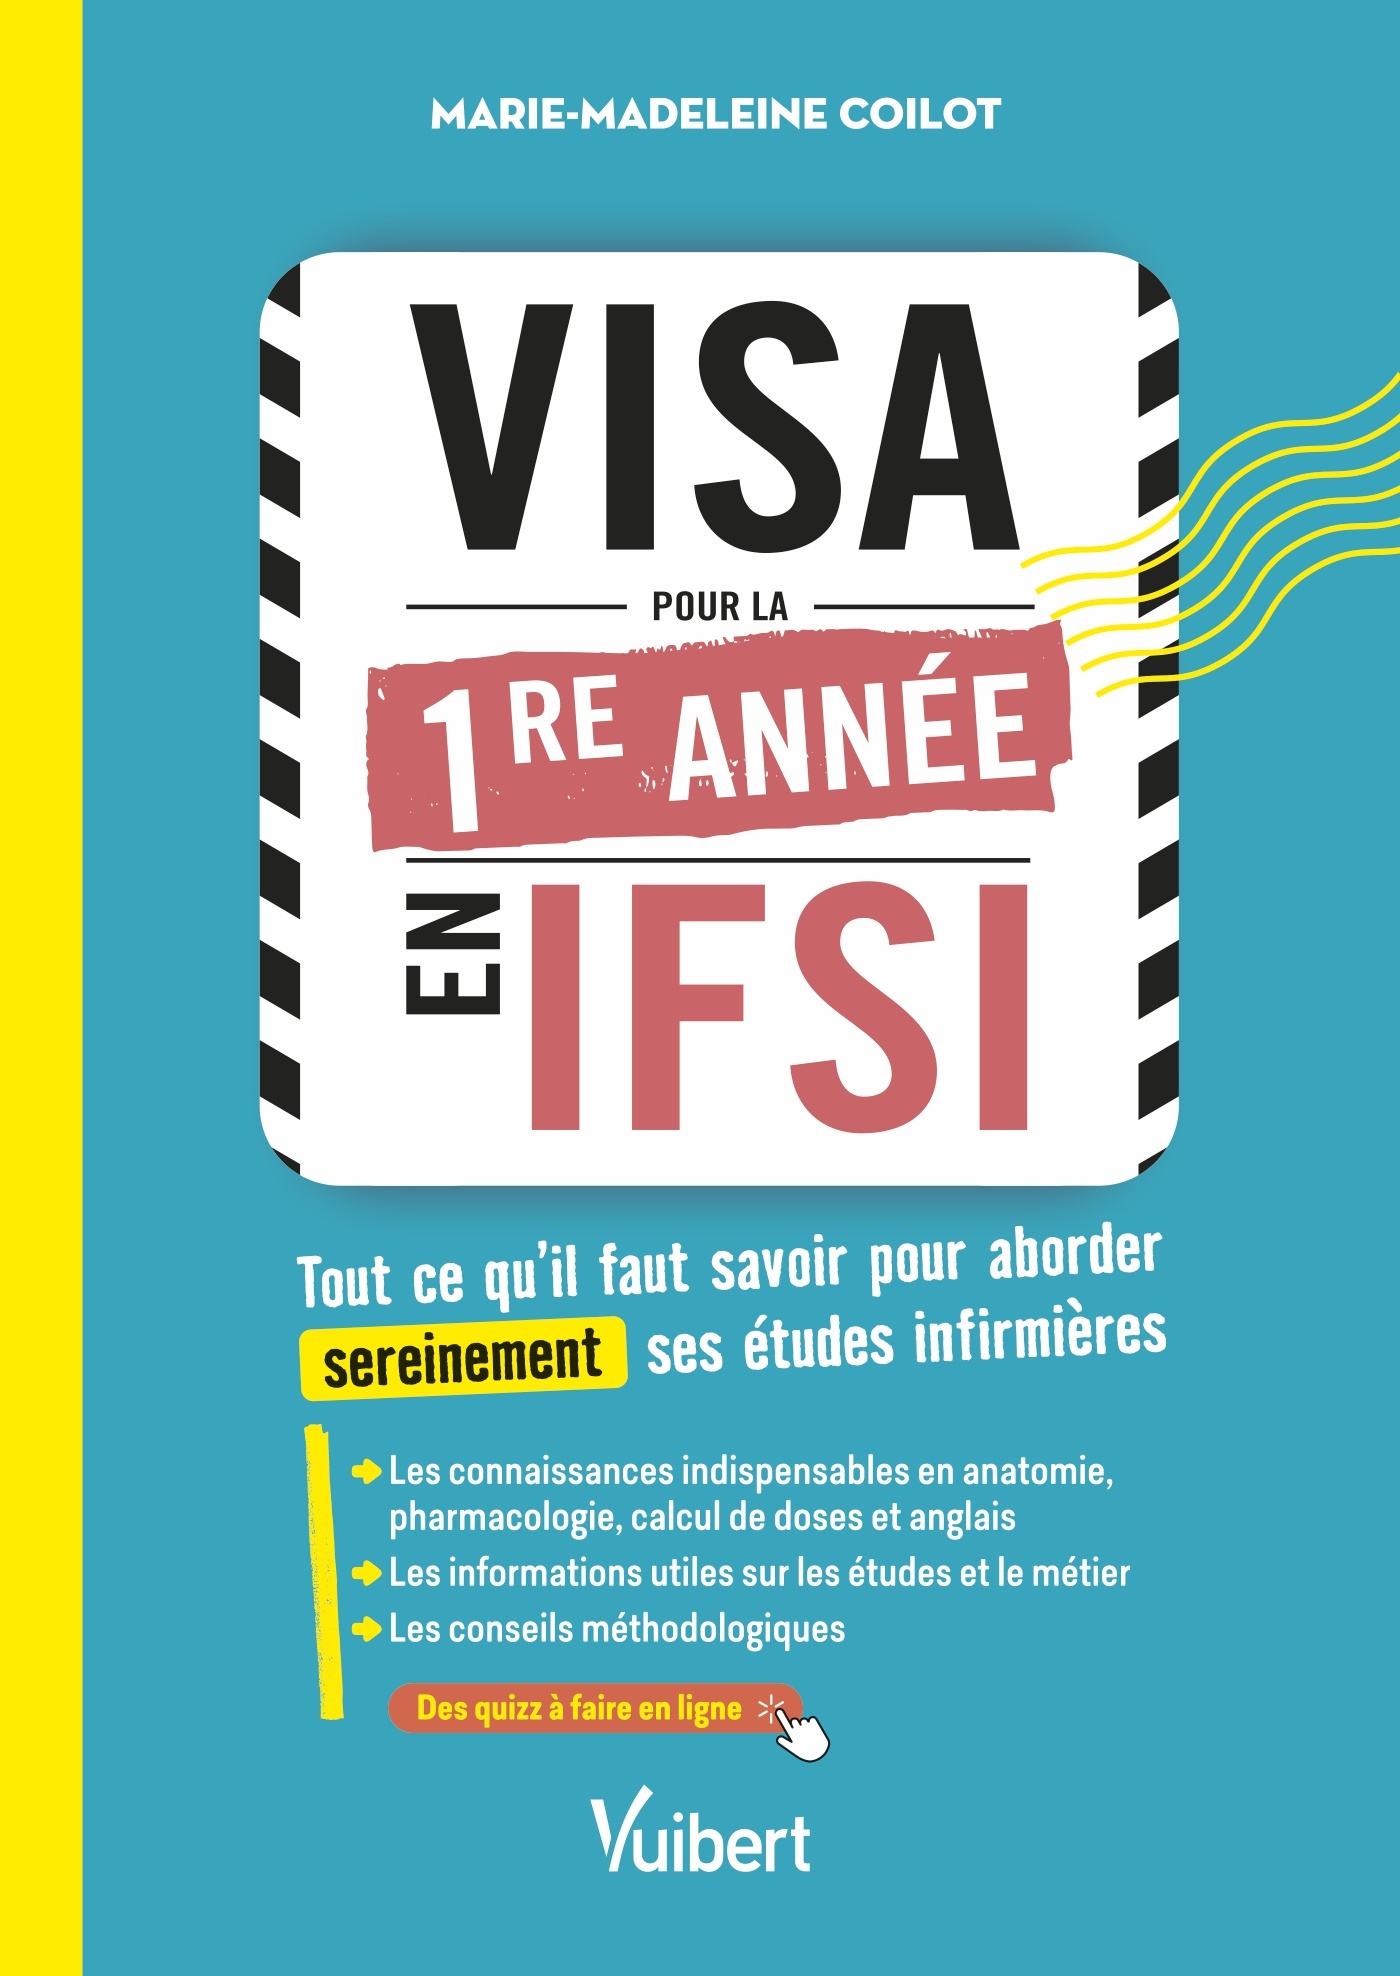 VISA pour la première année en IFSI | Vuibert